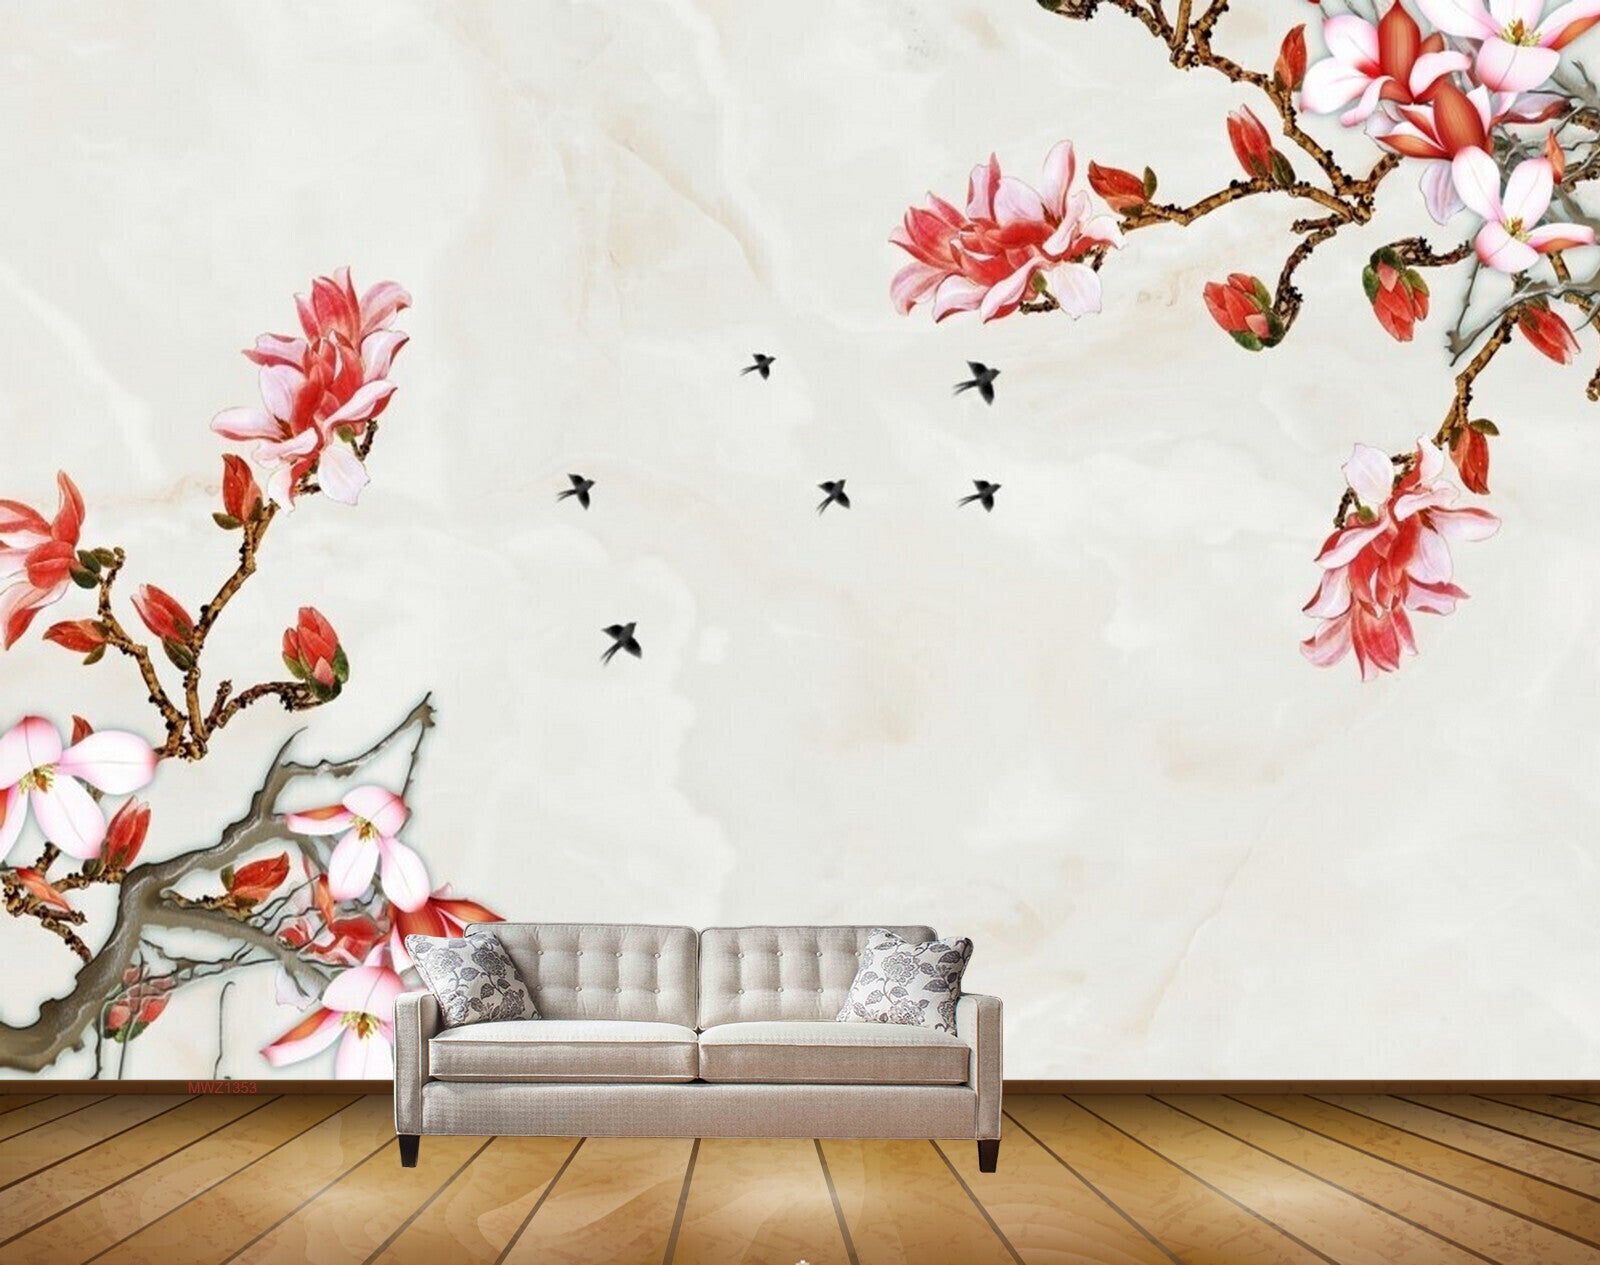 Avikalp MWZ1353 Red White Flowers Birds Branches 3D HD Wallpaper